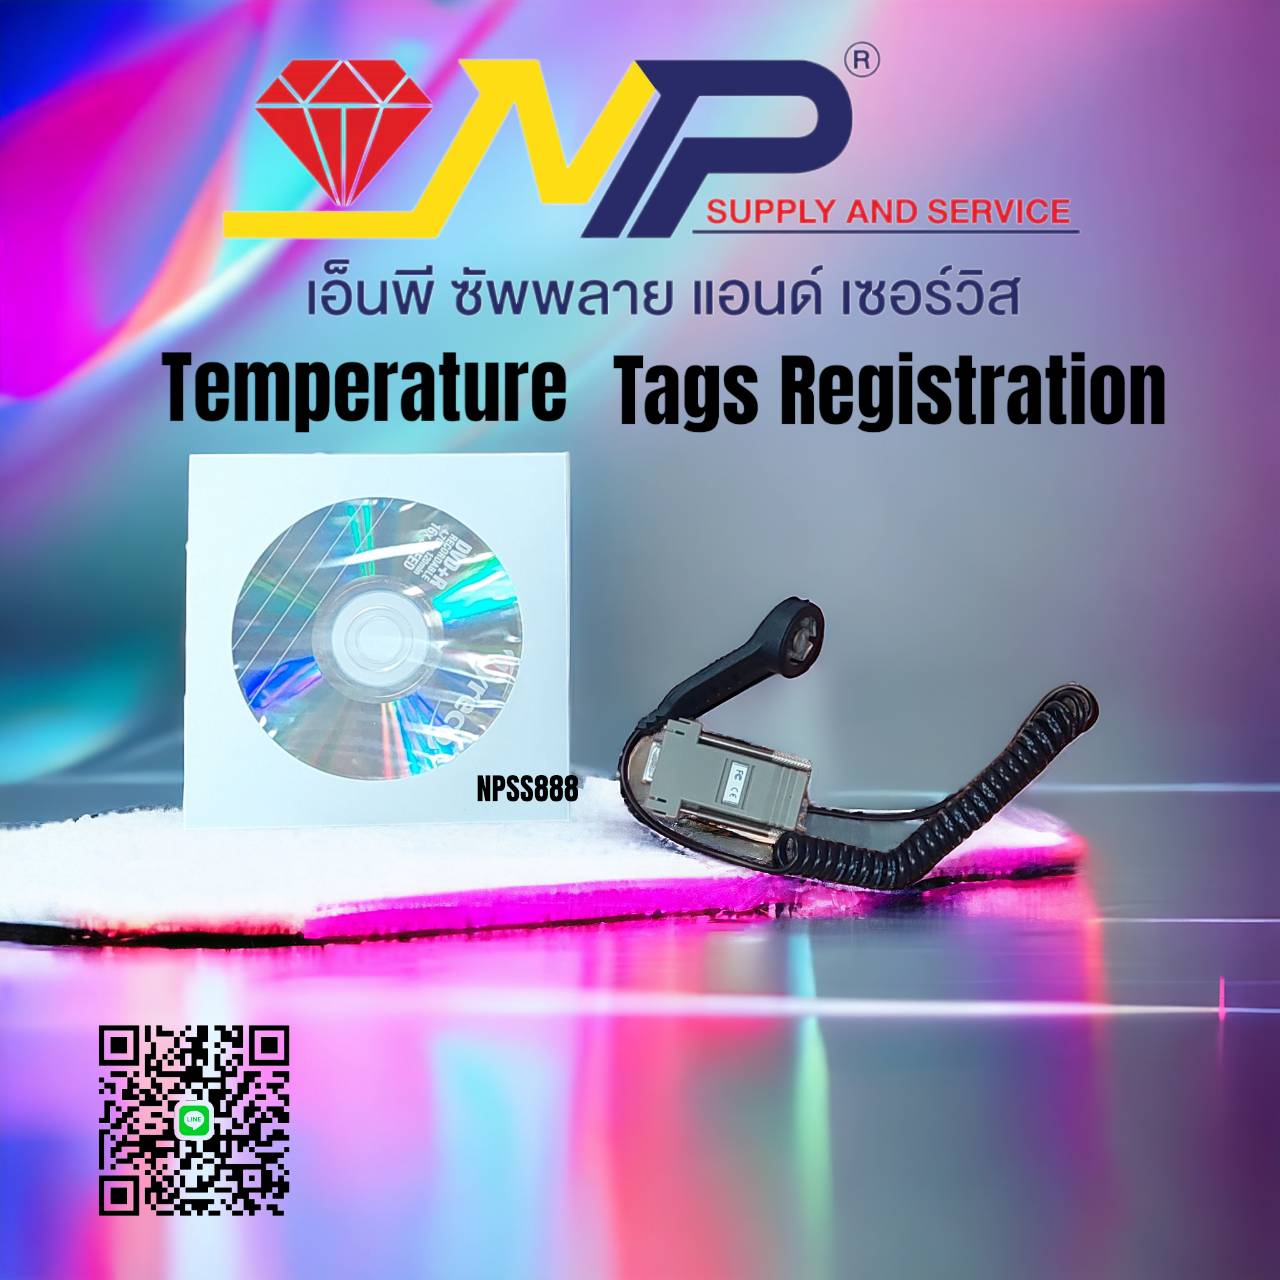 Temperature Tags Registration